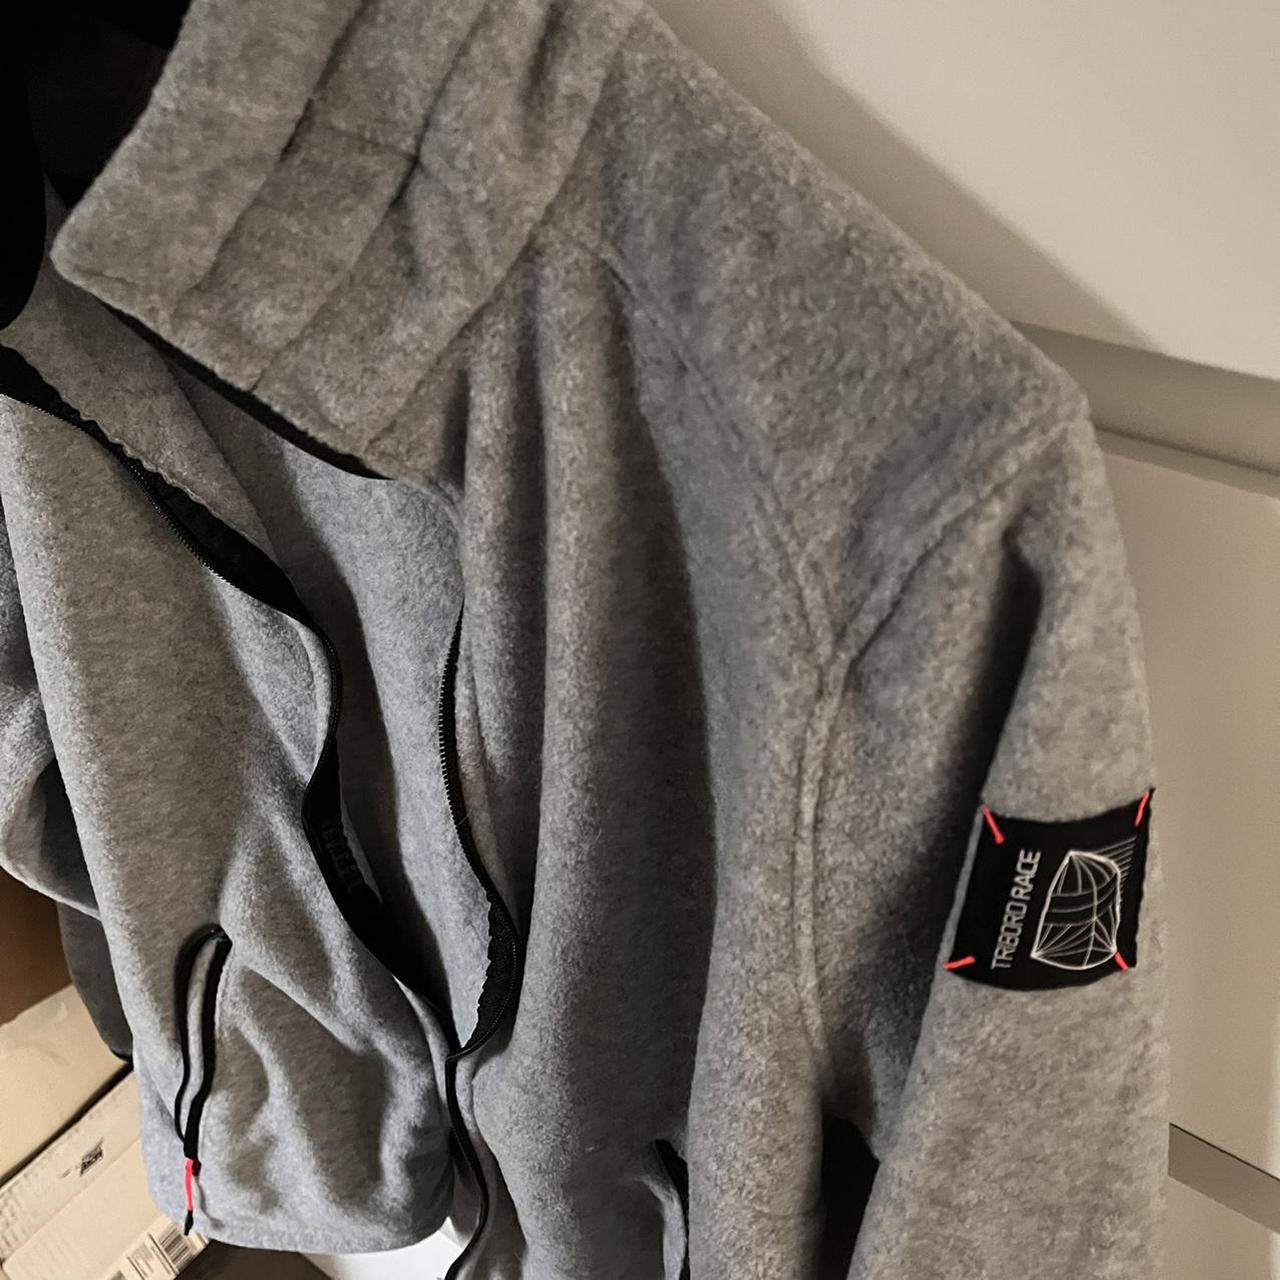 Product Image 3 - Fleece/ cotton jacket from Decathlon.